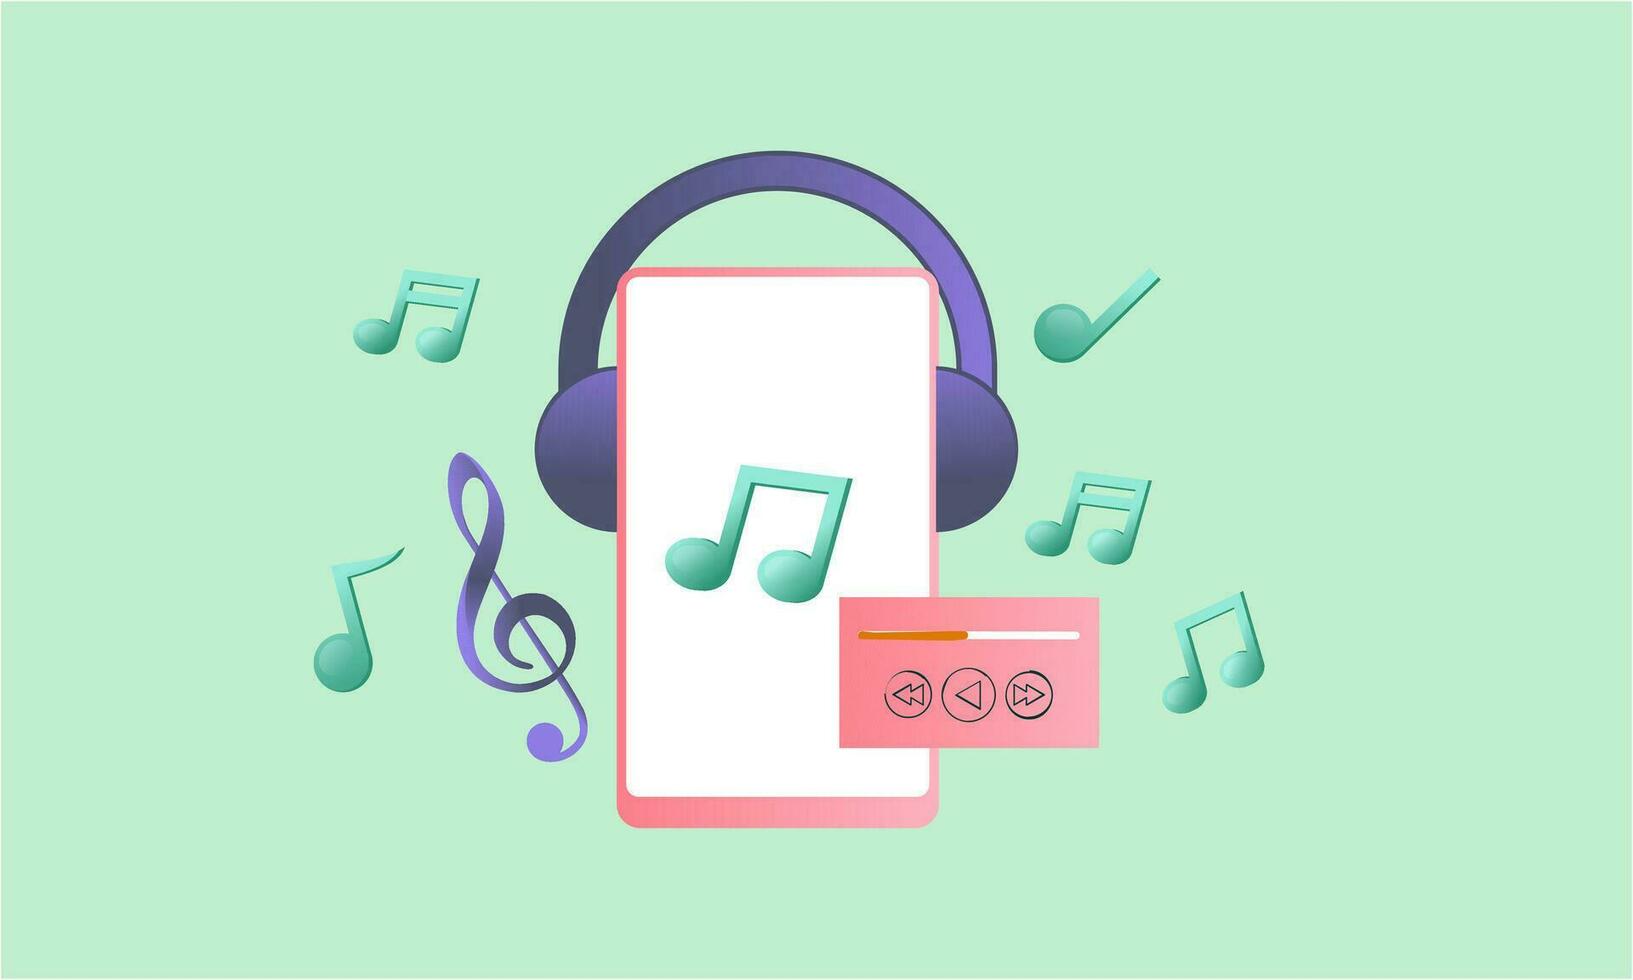 Music notes, song, melody or tune logo vector